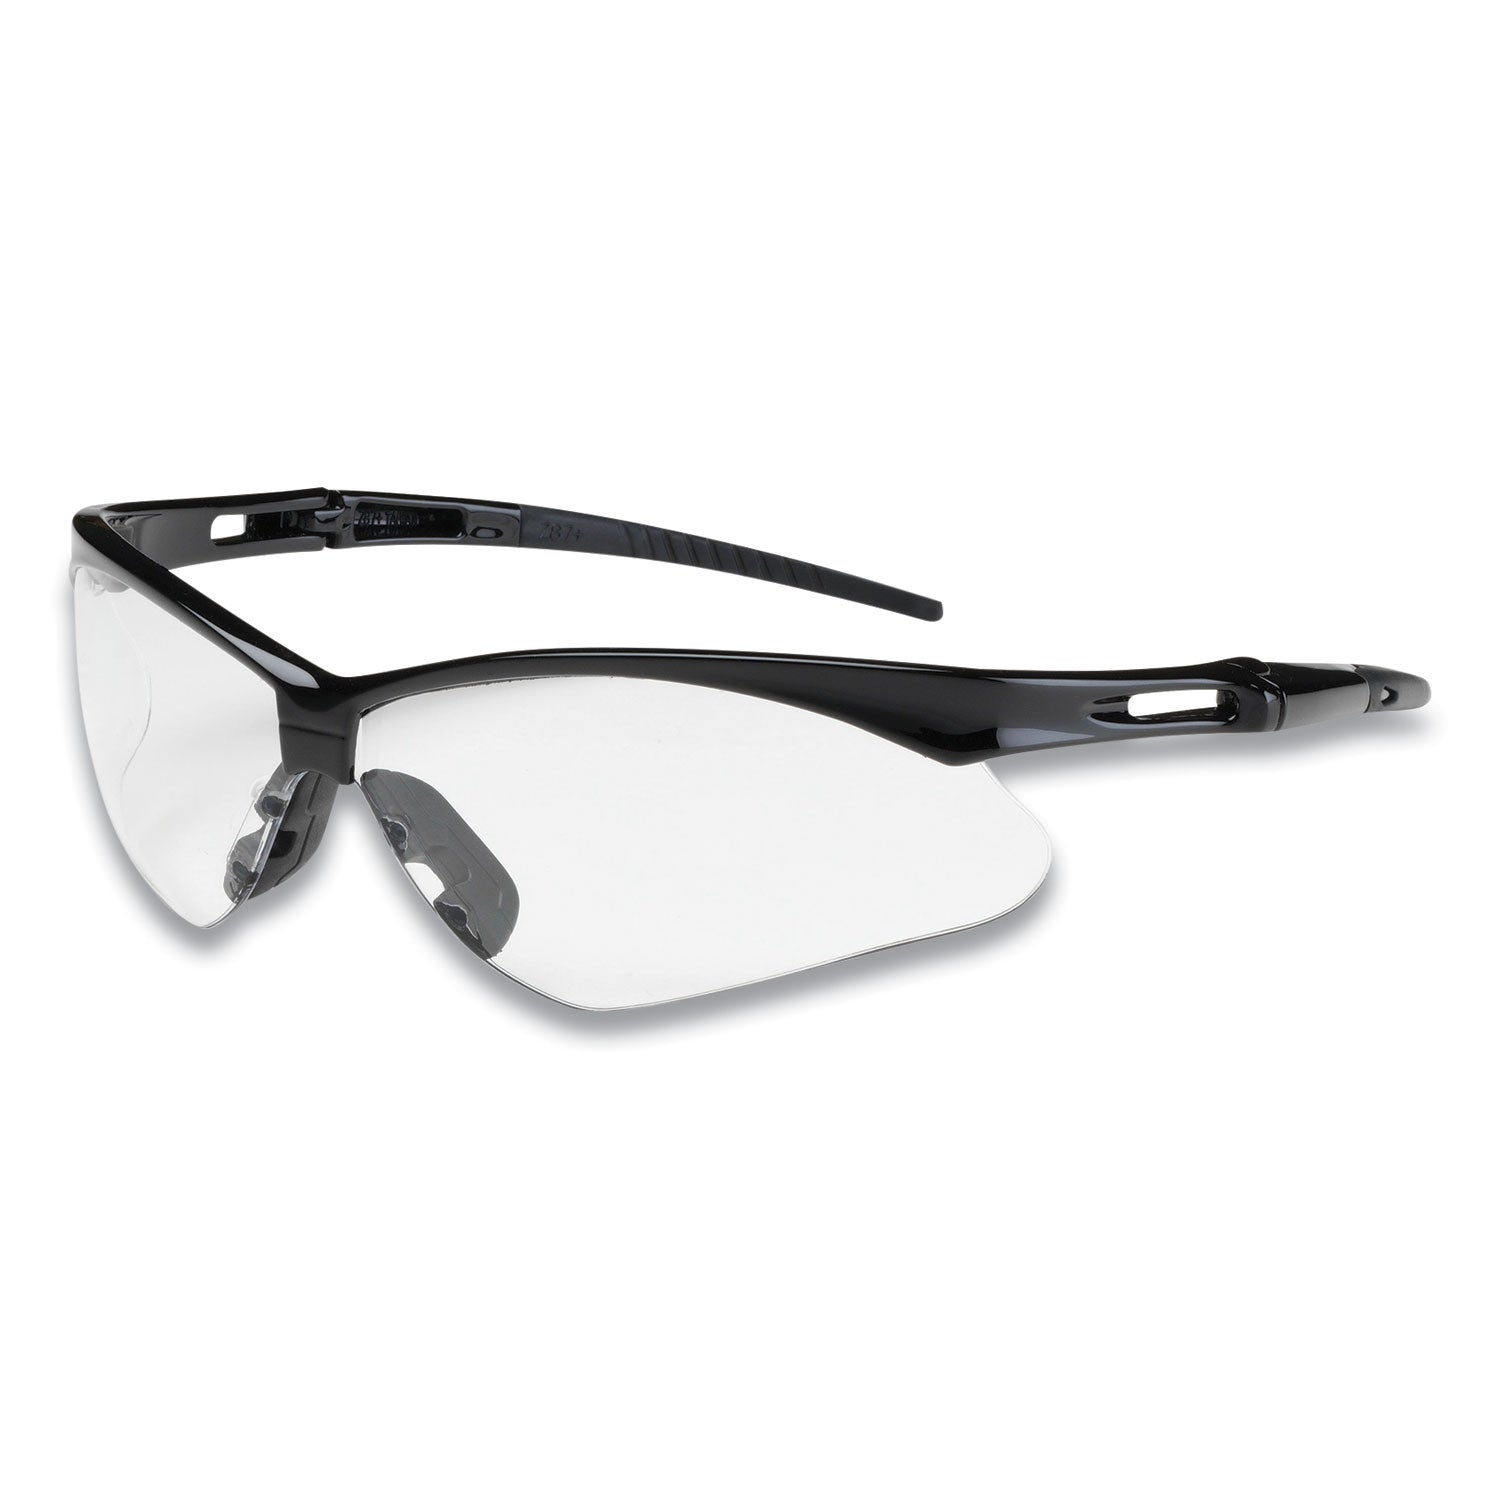 anser-optical-safety-glasses-anti-fog-scratch-resistant-clear-lens-black-frame_pid250an10111 - 1